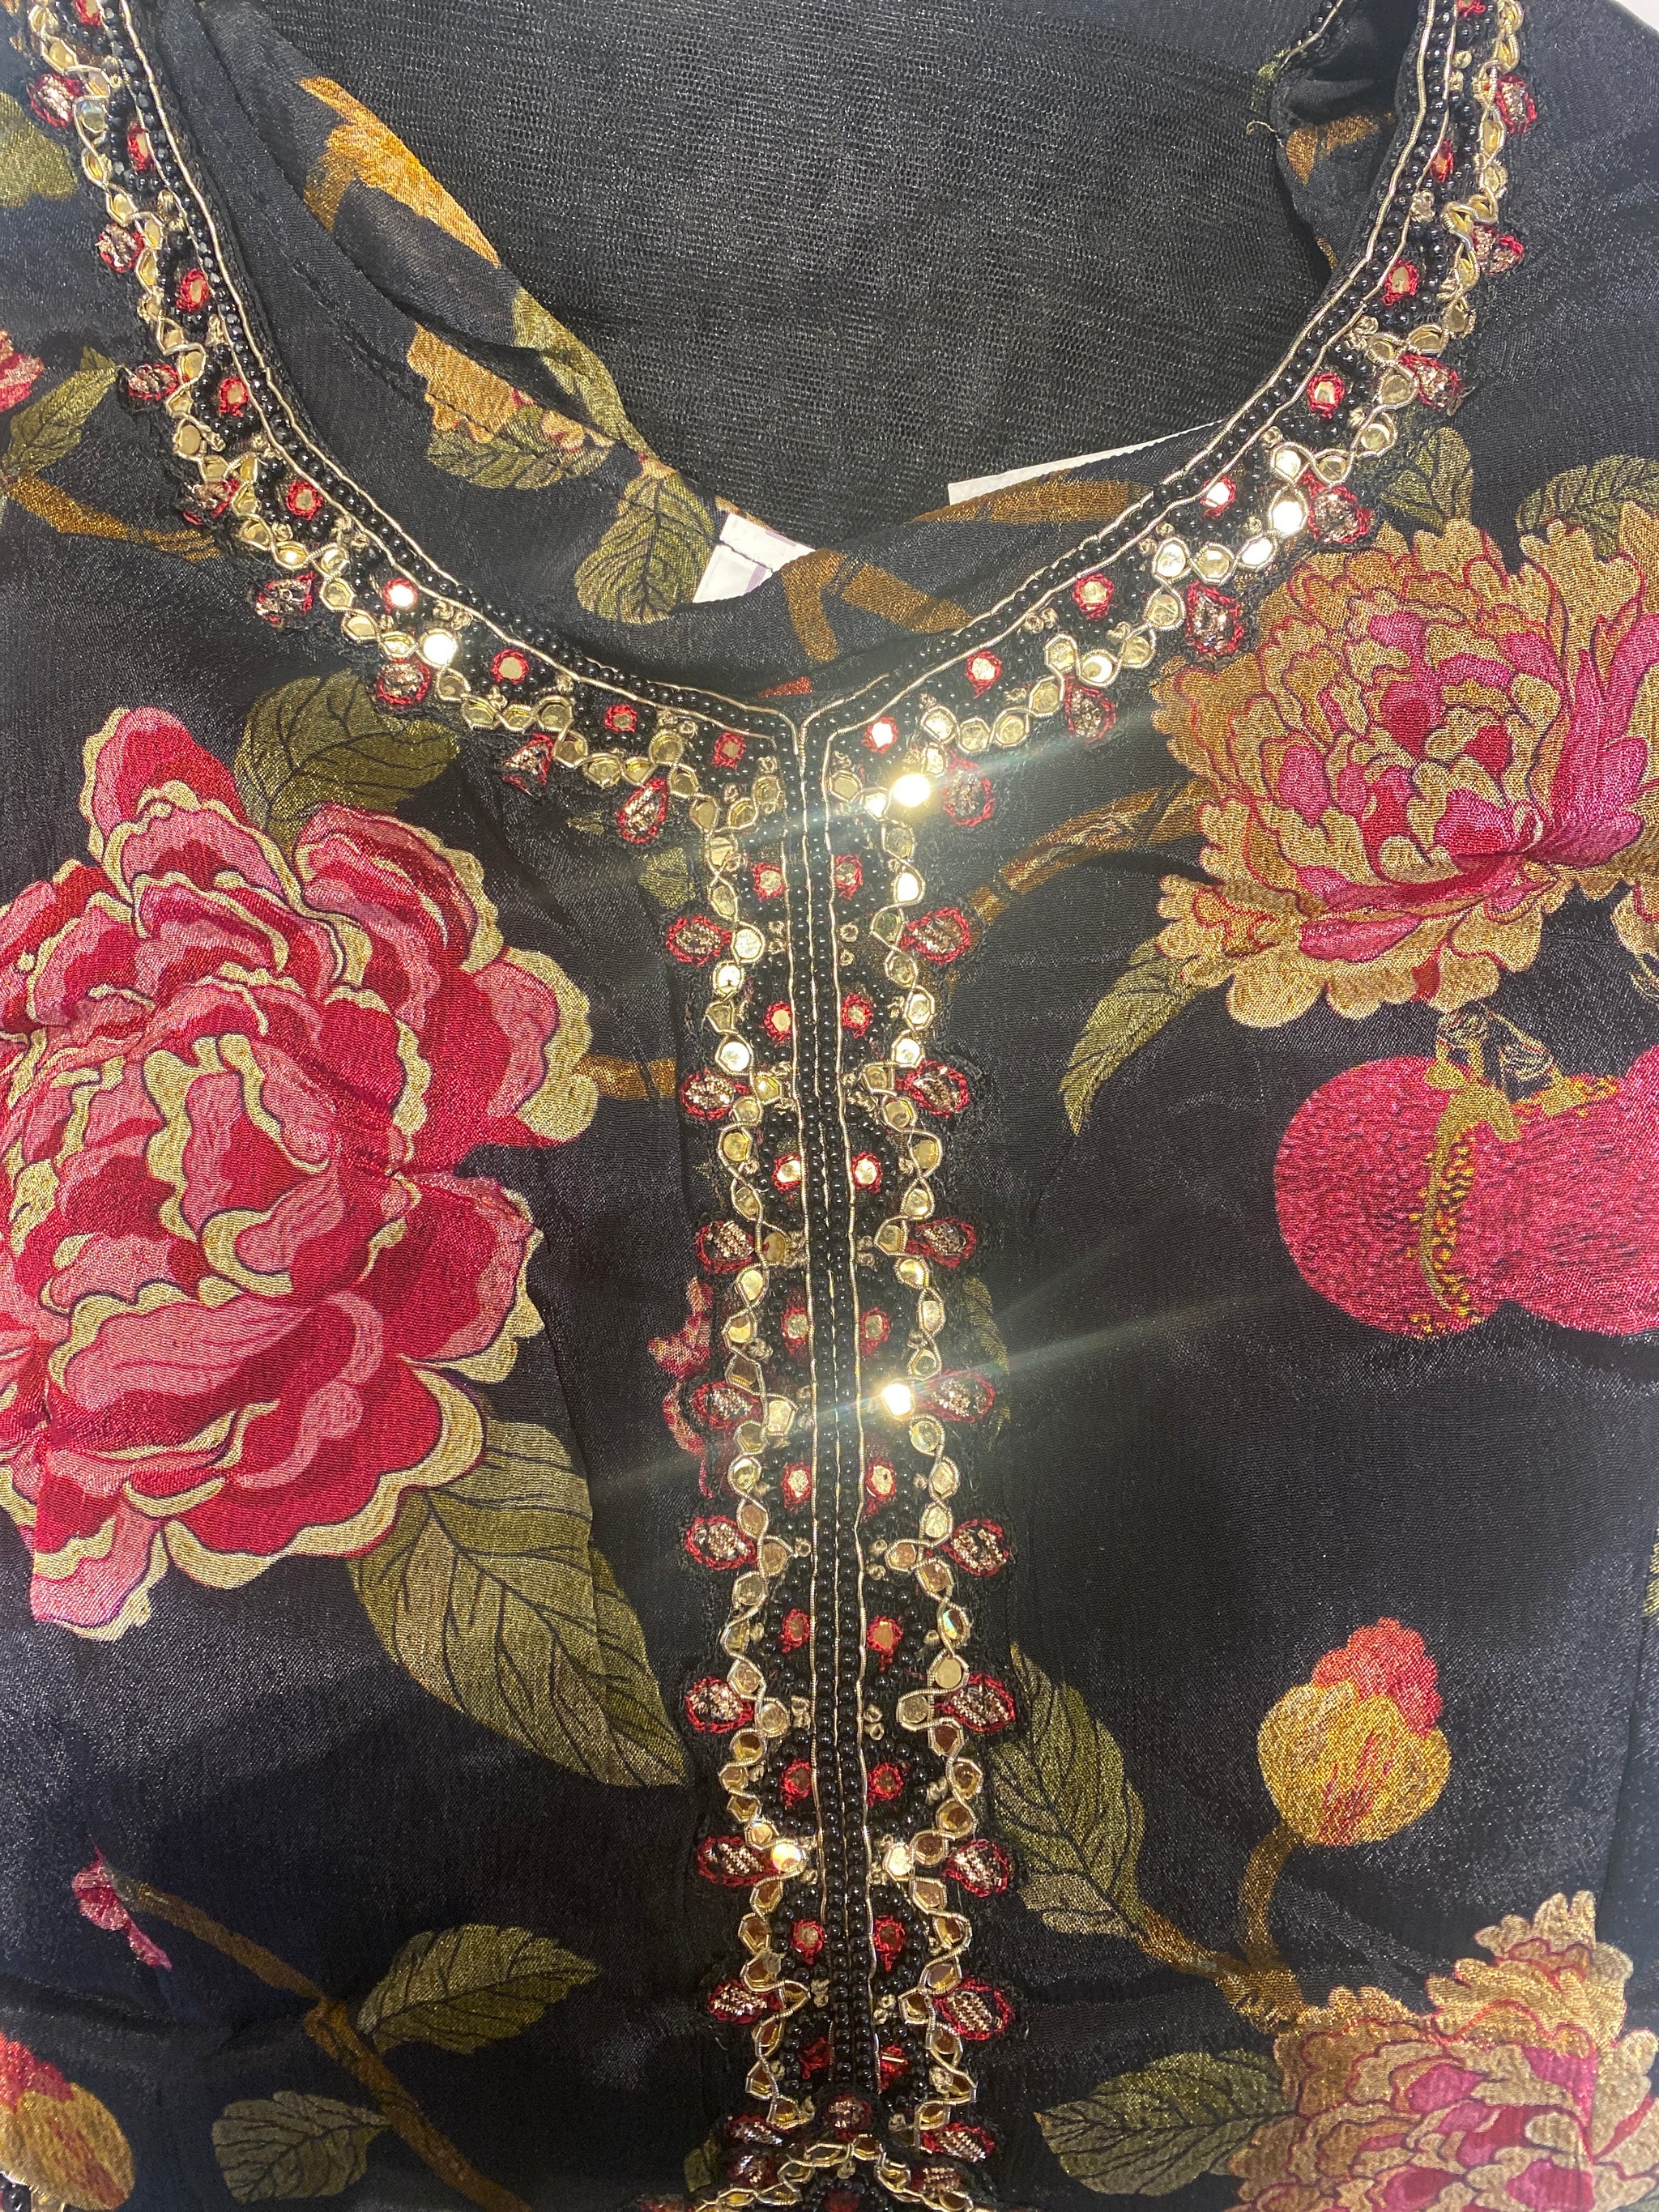 Floral Printed Anarkali Suit with Neck Embellishment